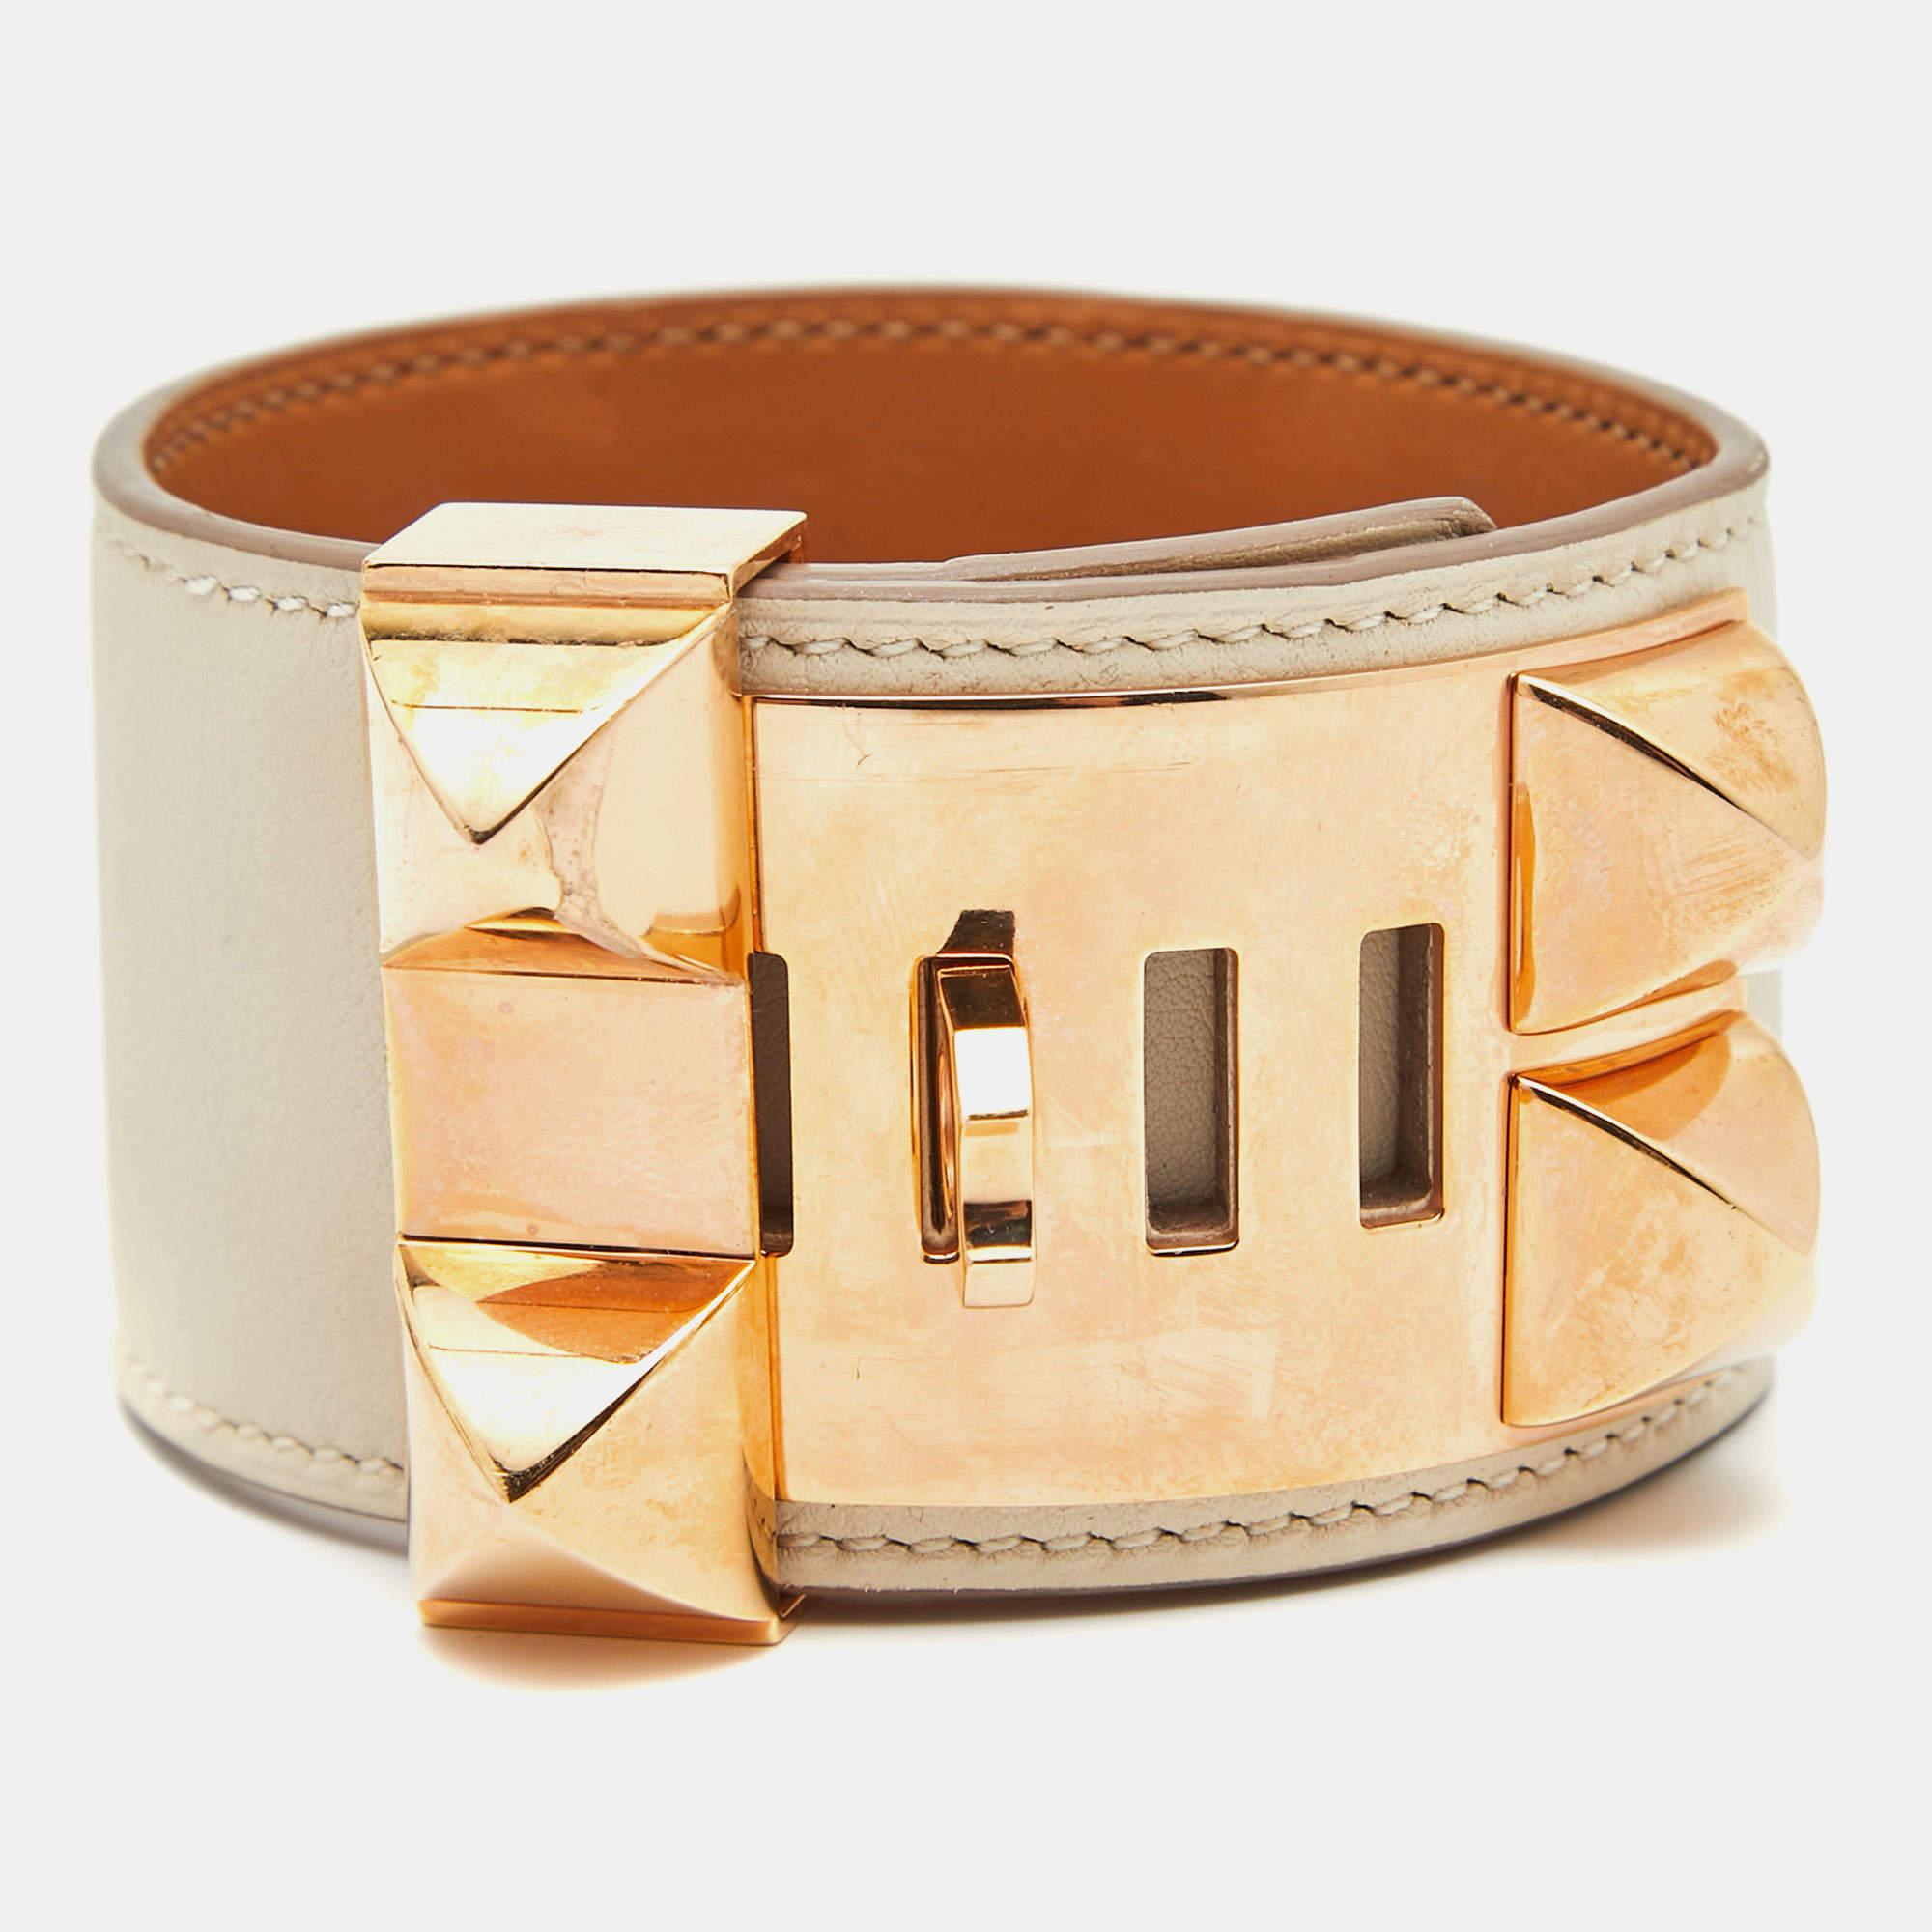 Aesthetic Movement Hermes Collier De Chien Leather Gold Plated Bracelet For Sale